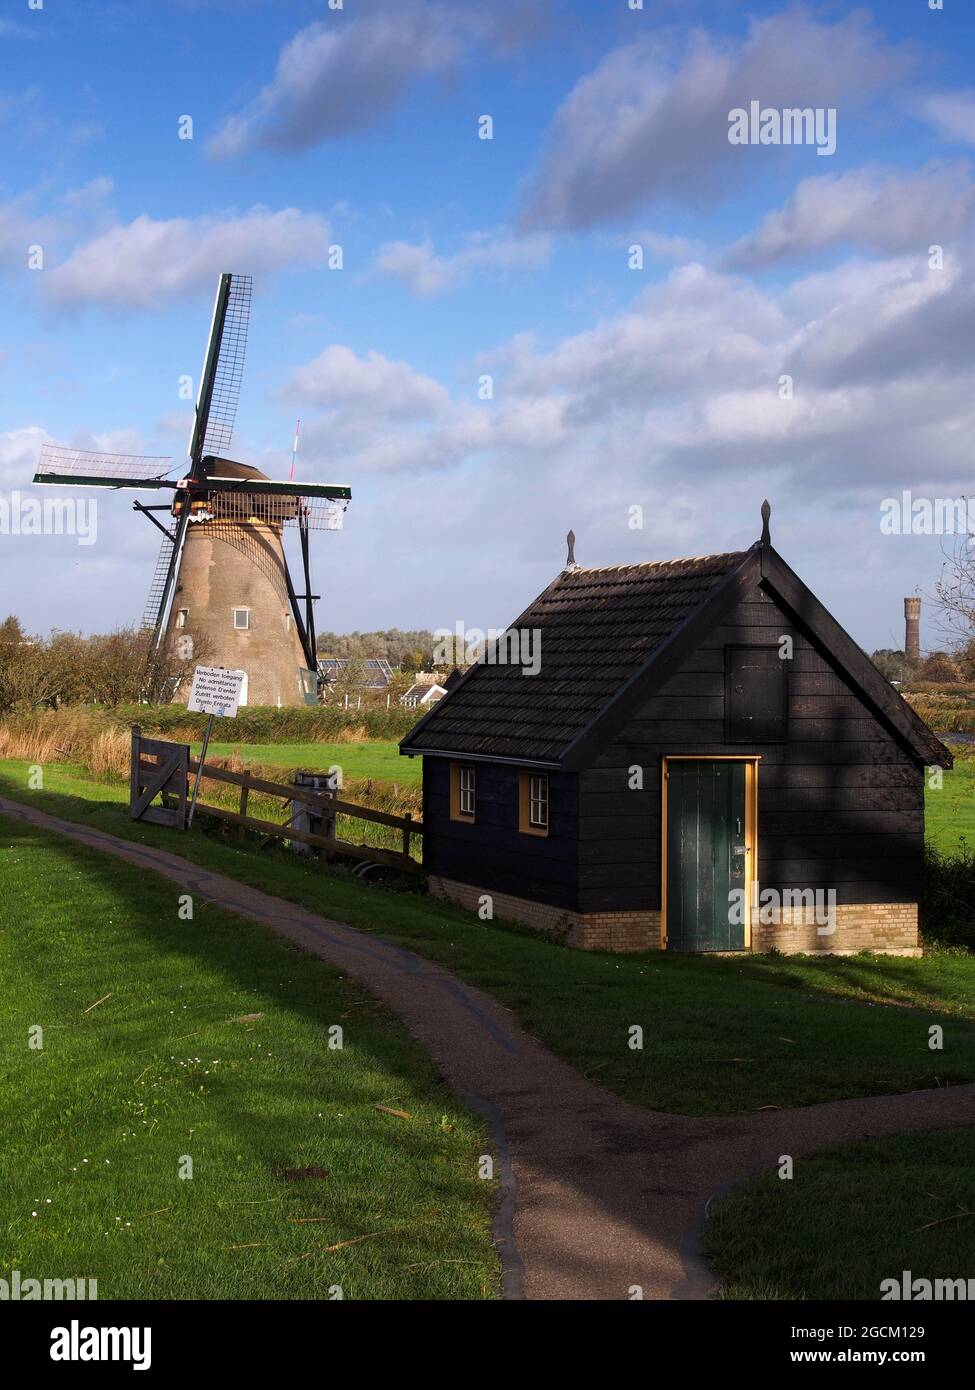 World Heritage site The windmills at Kinderdijk in Amsterdam Europe Stock Photo